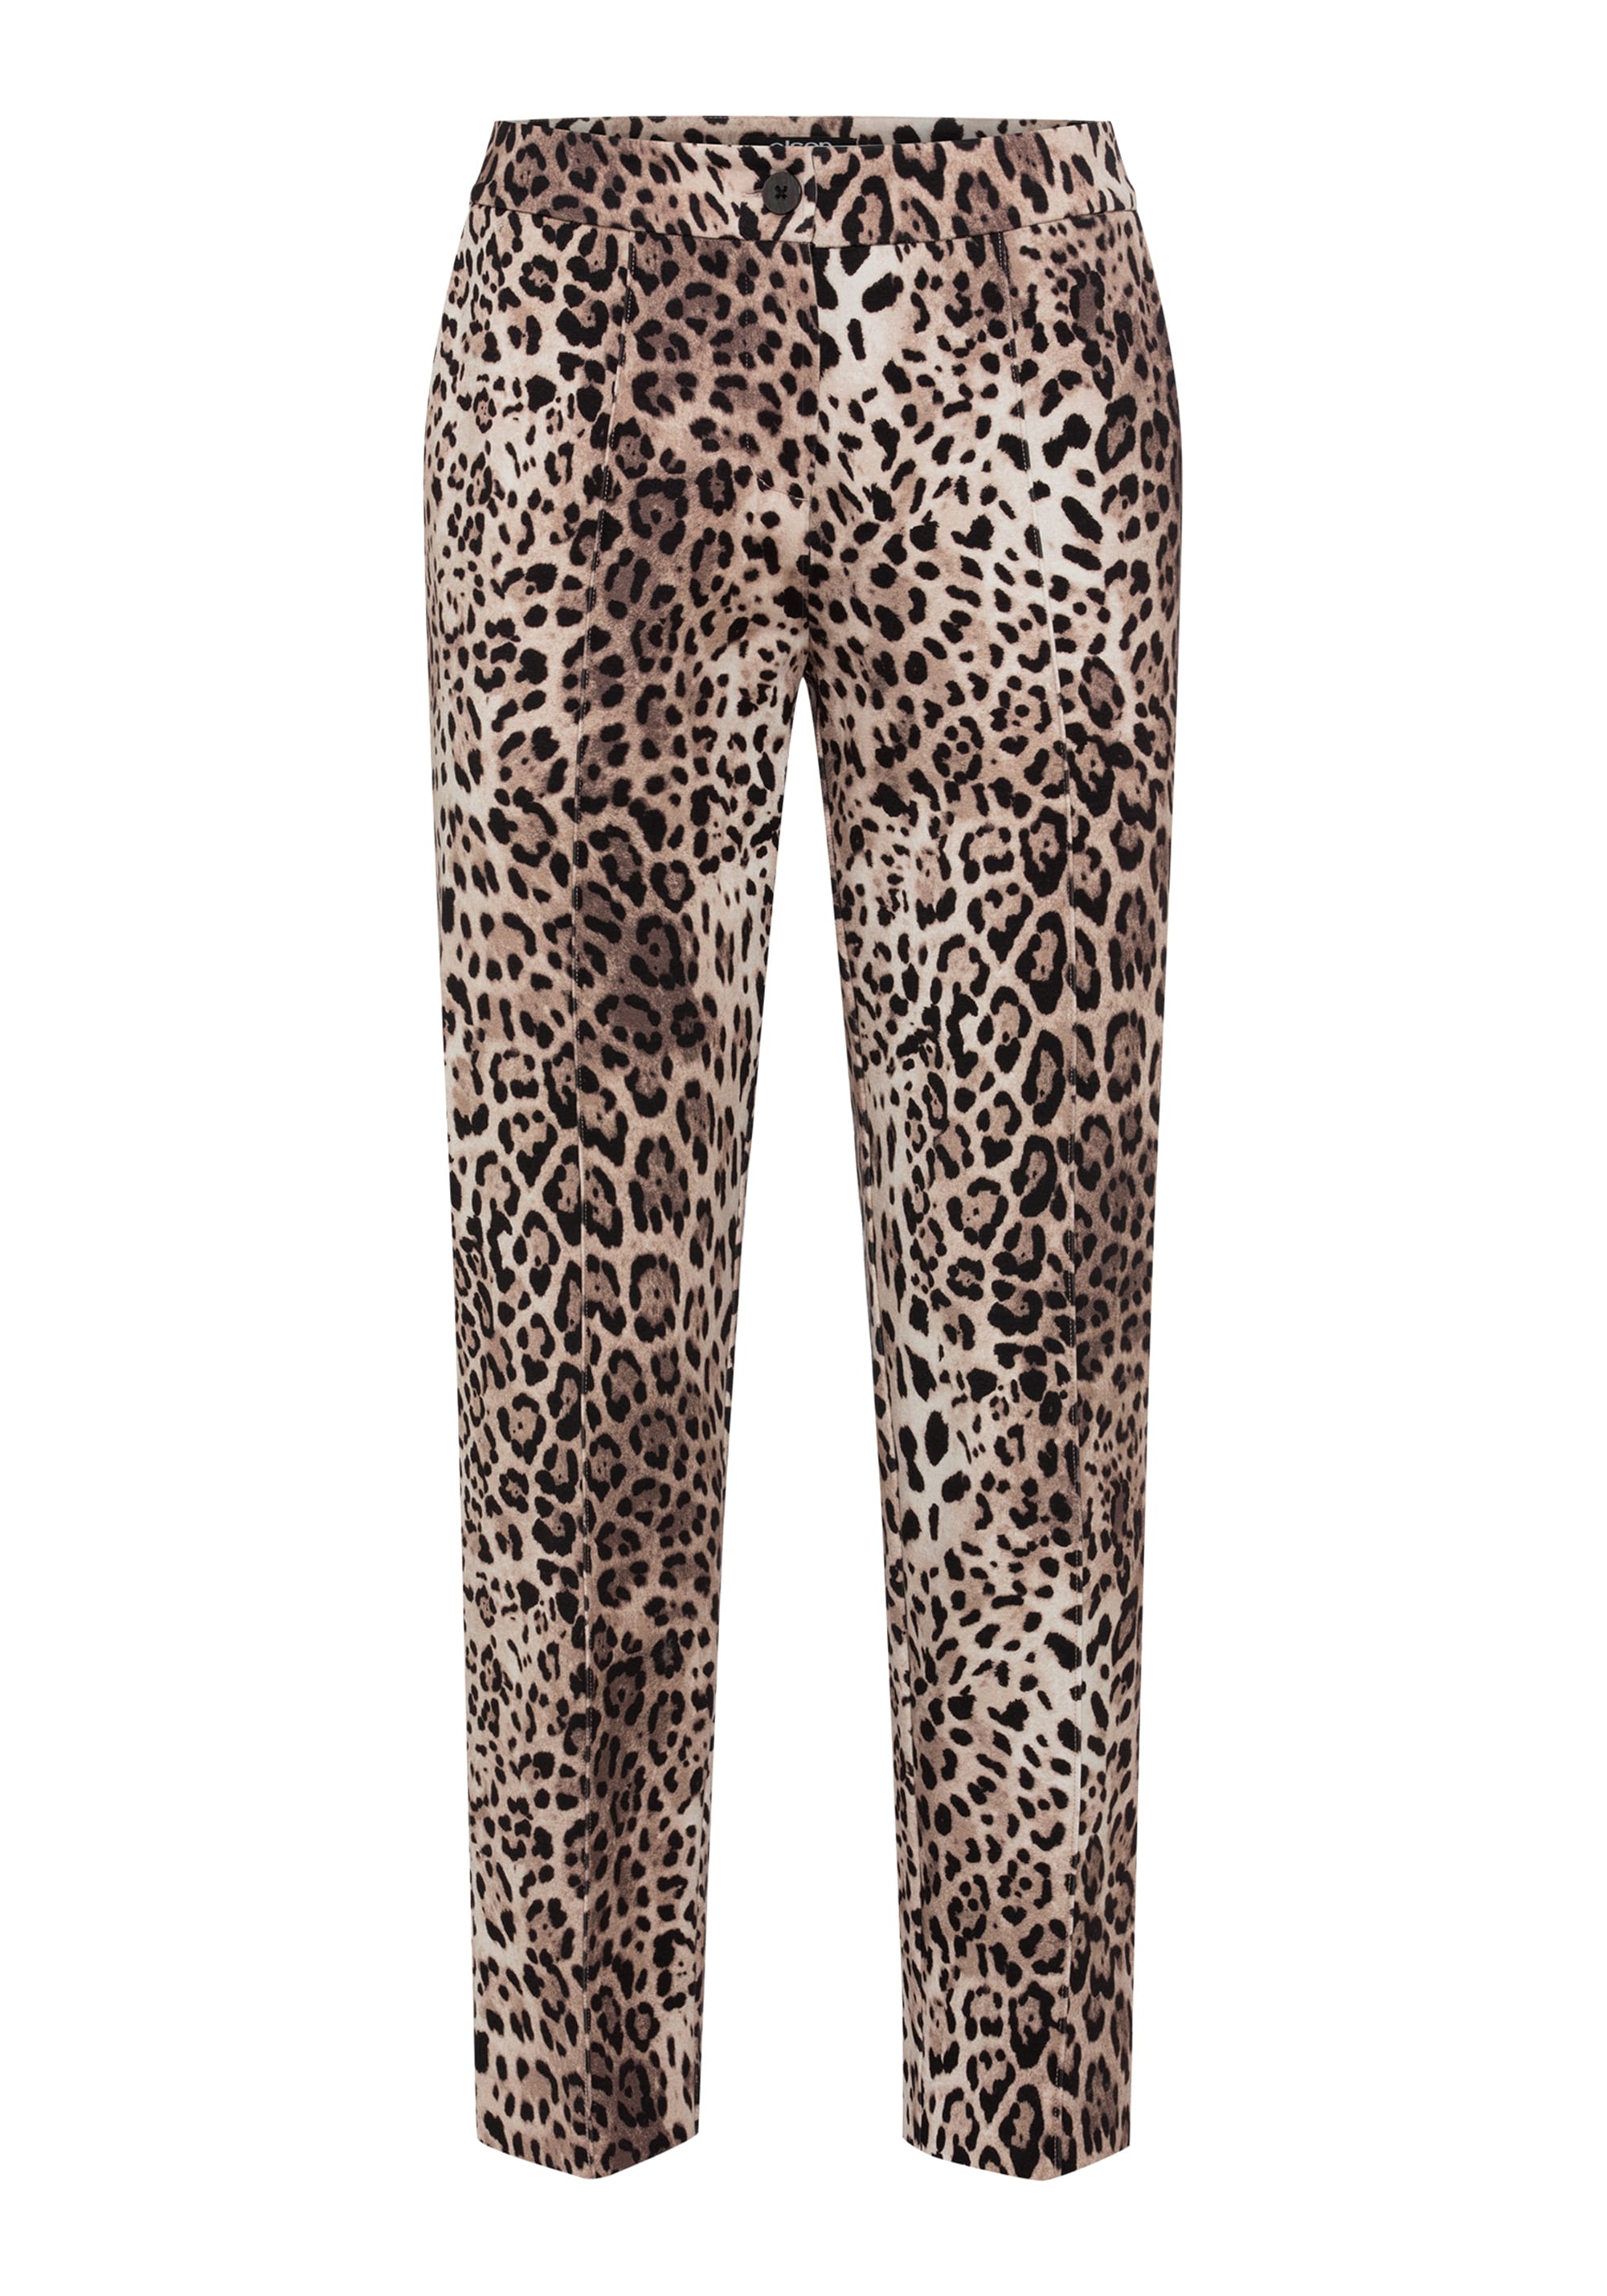 Kookai Leopard Leggings / Vintage 90s Animal Print High Waist Cotton  Cropped Pants Size Small -  Canada